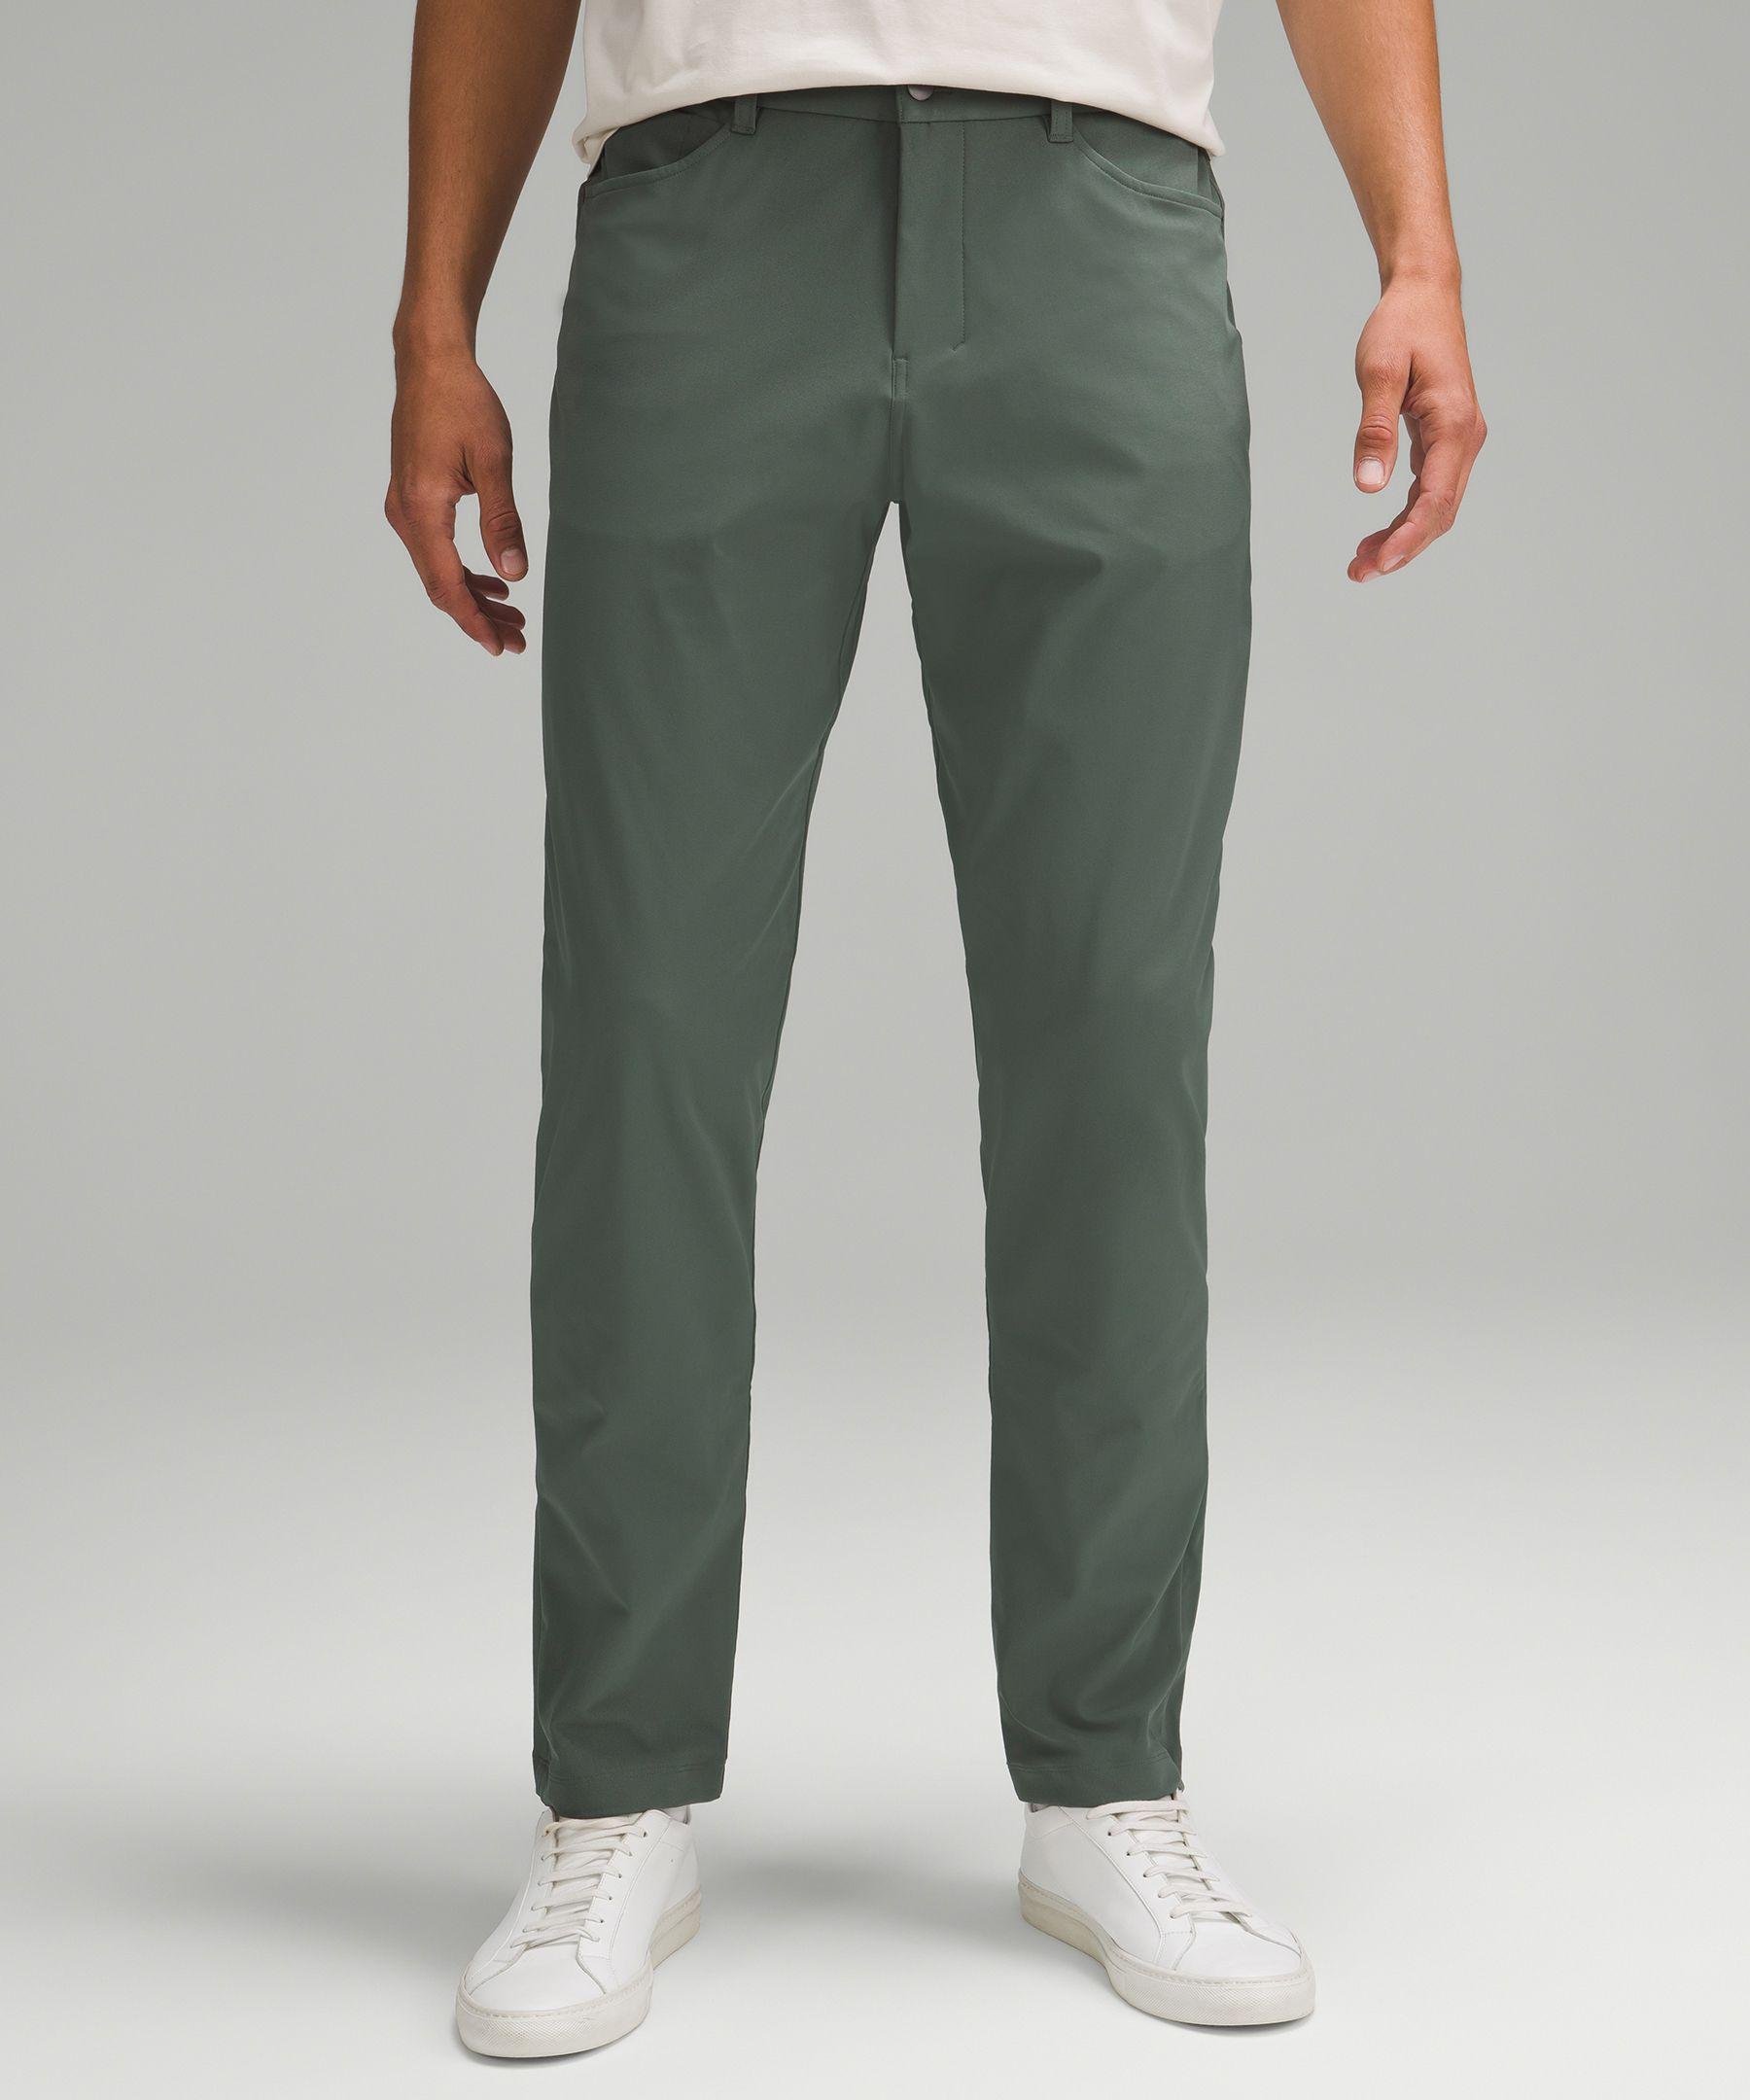 https://cdna.lystit.com/photos/lululemon/7334b52d/lululemon-athletica-designer-Dark-Forest-Abc-Classic-fit-5-Pocket-Trousers-Warpstreme-34-Color-Green-Size-29.jpeg